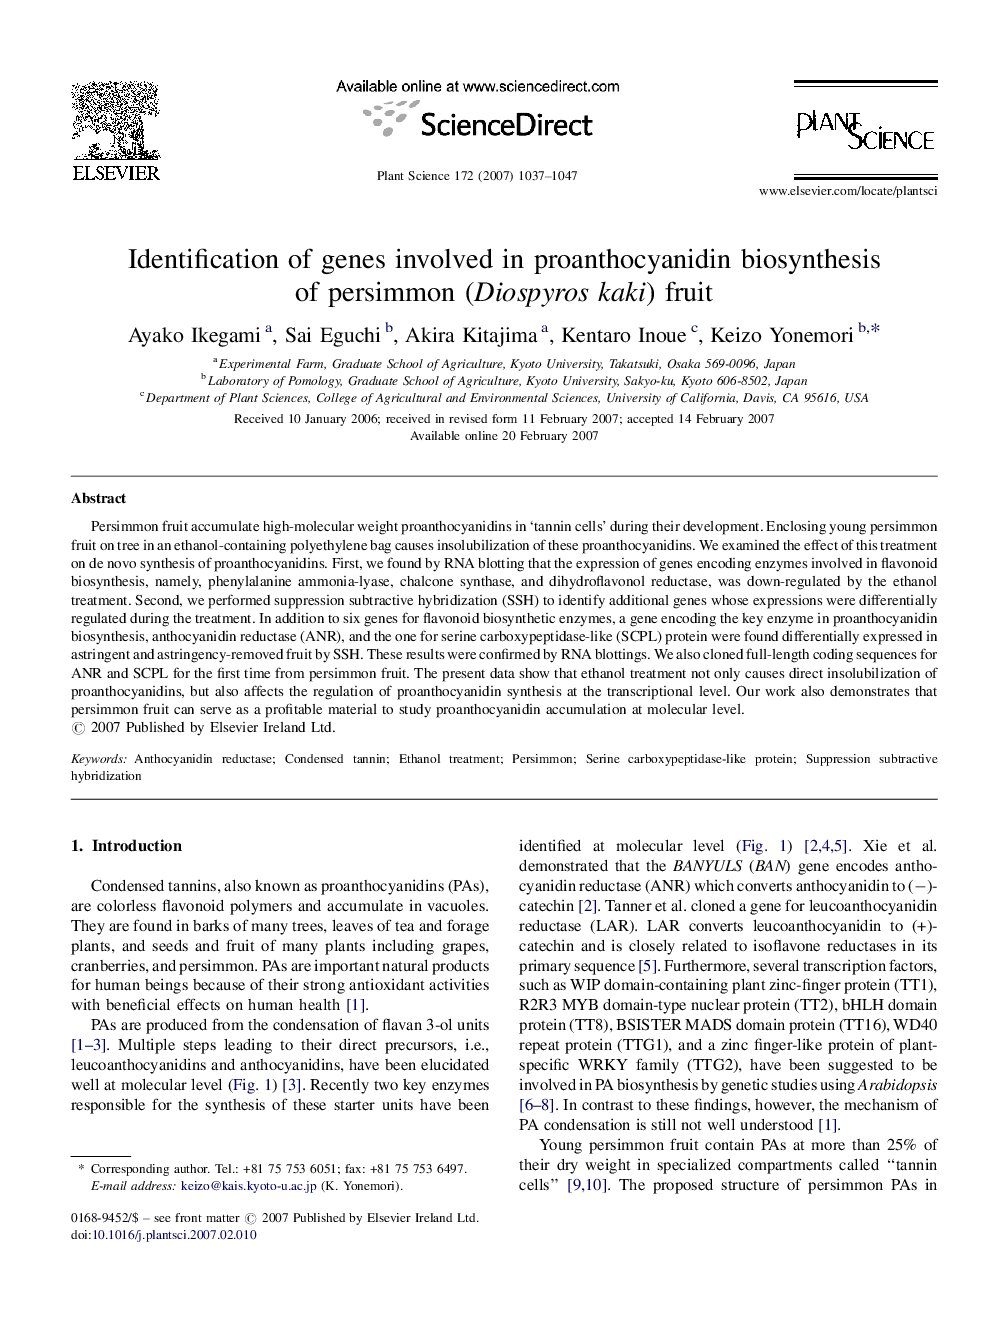 Identification of genes involved in proanthocyanidin biosynthesis of persimmon (Diospyros kaki) fruit